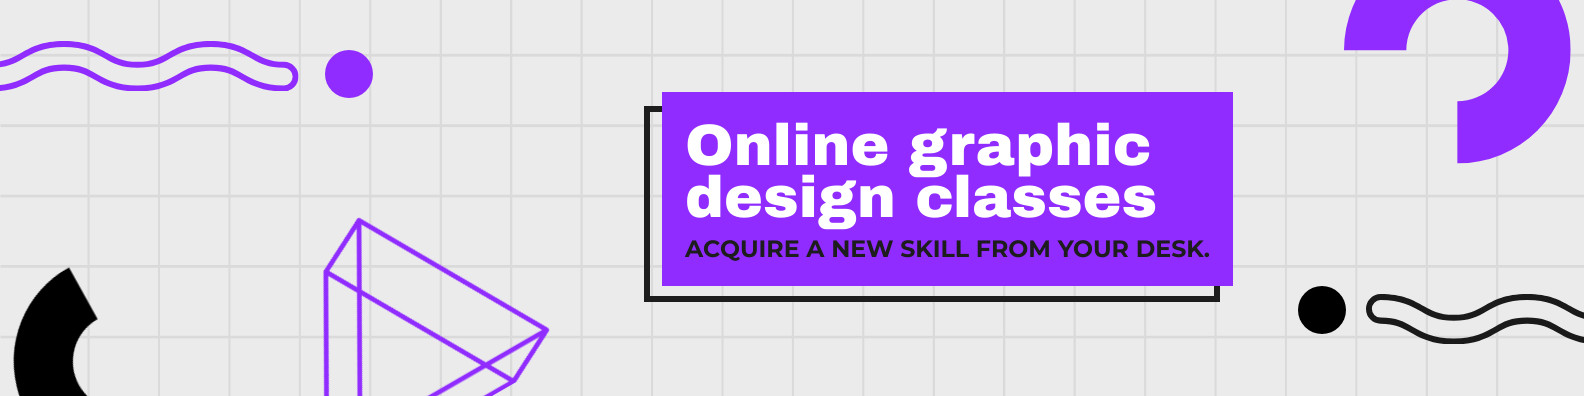 Online Graphic Design Classes Linkedin Profile BG